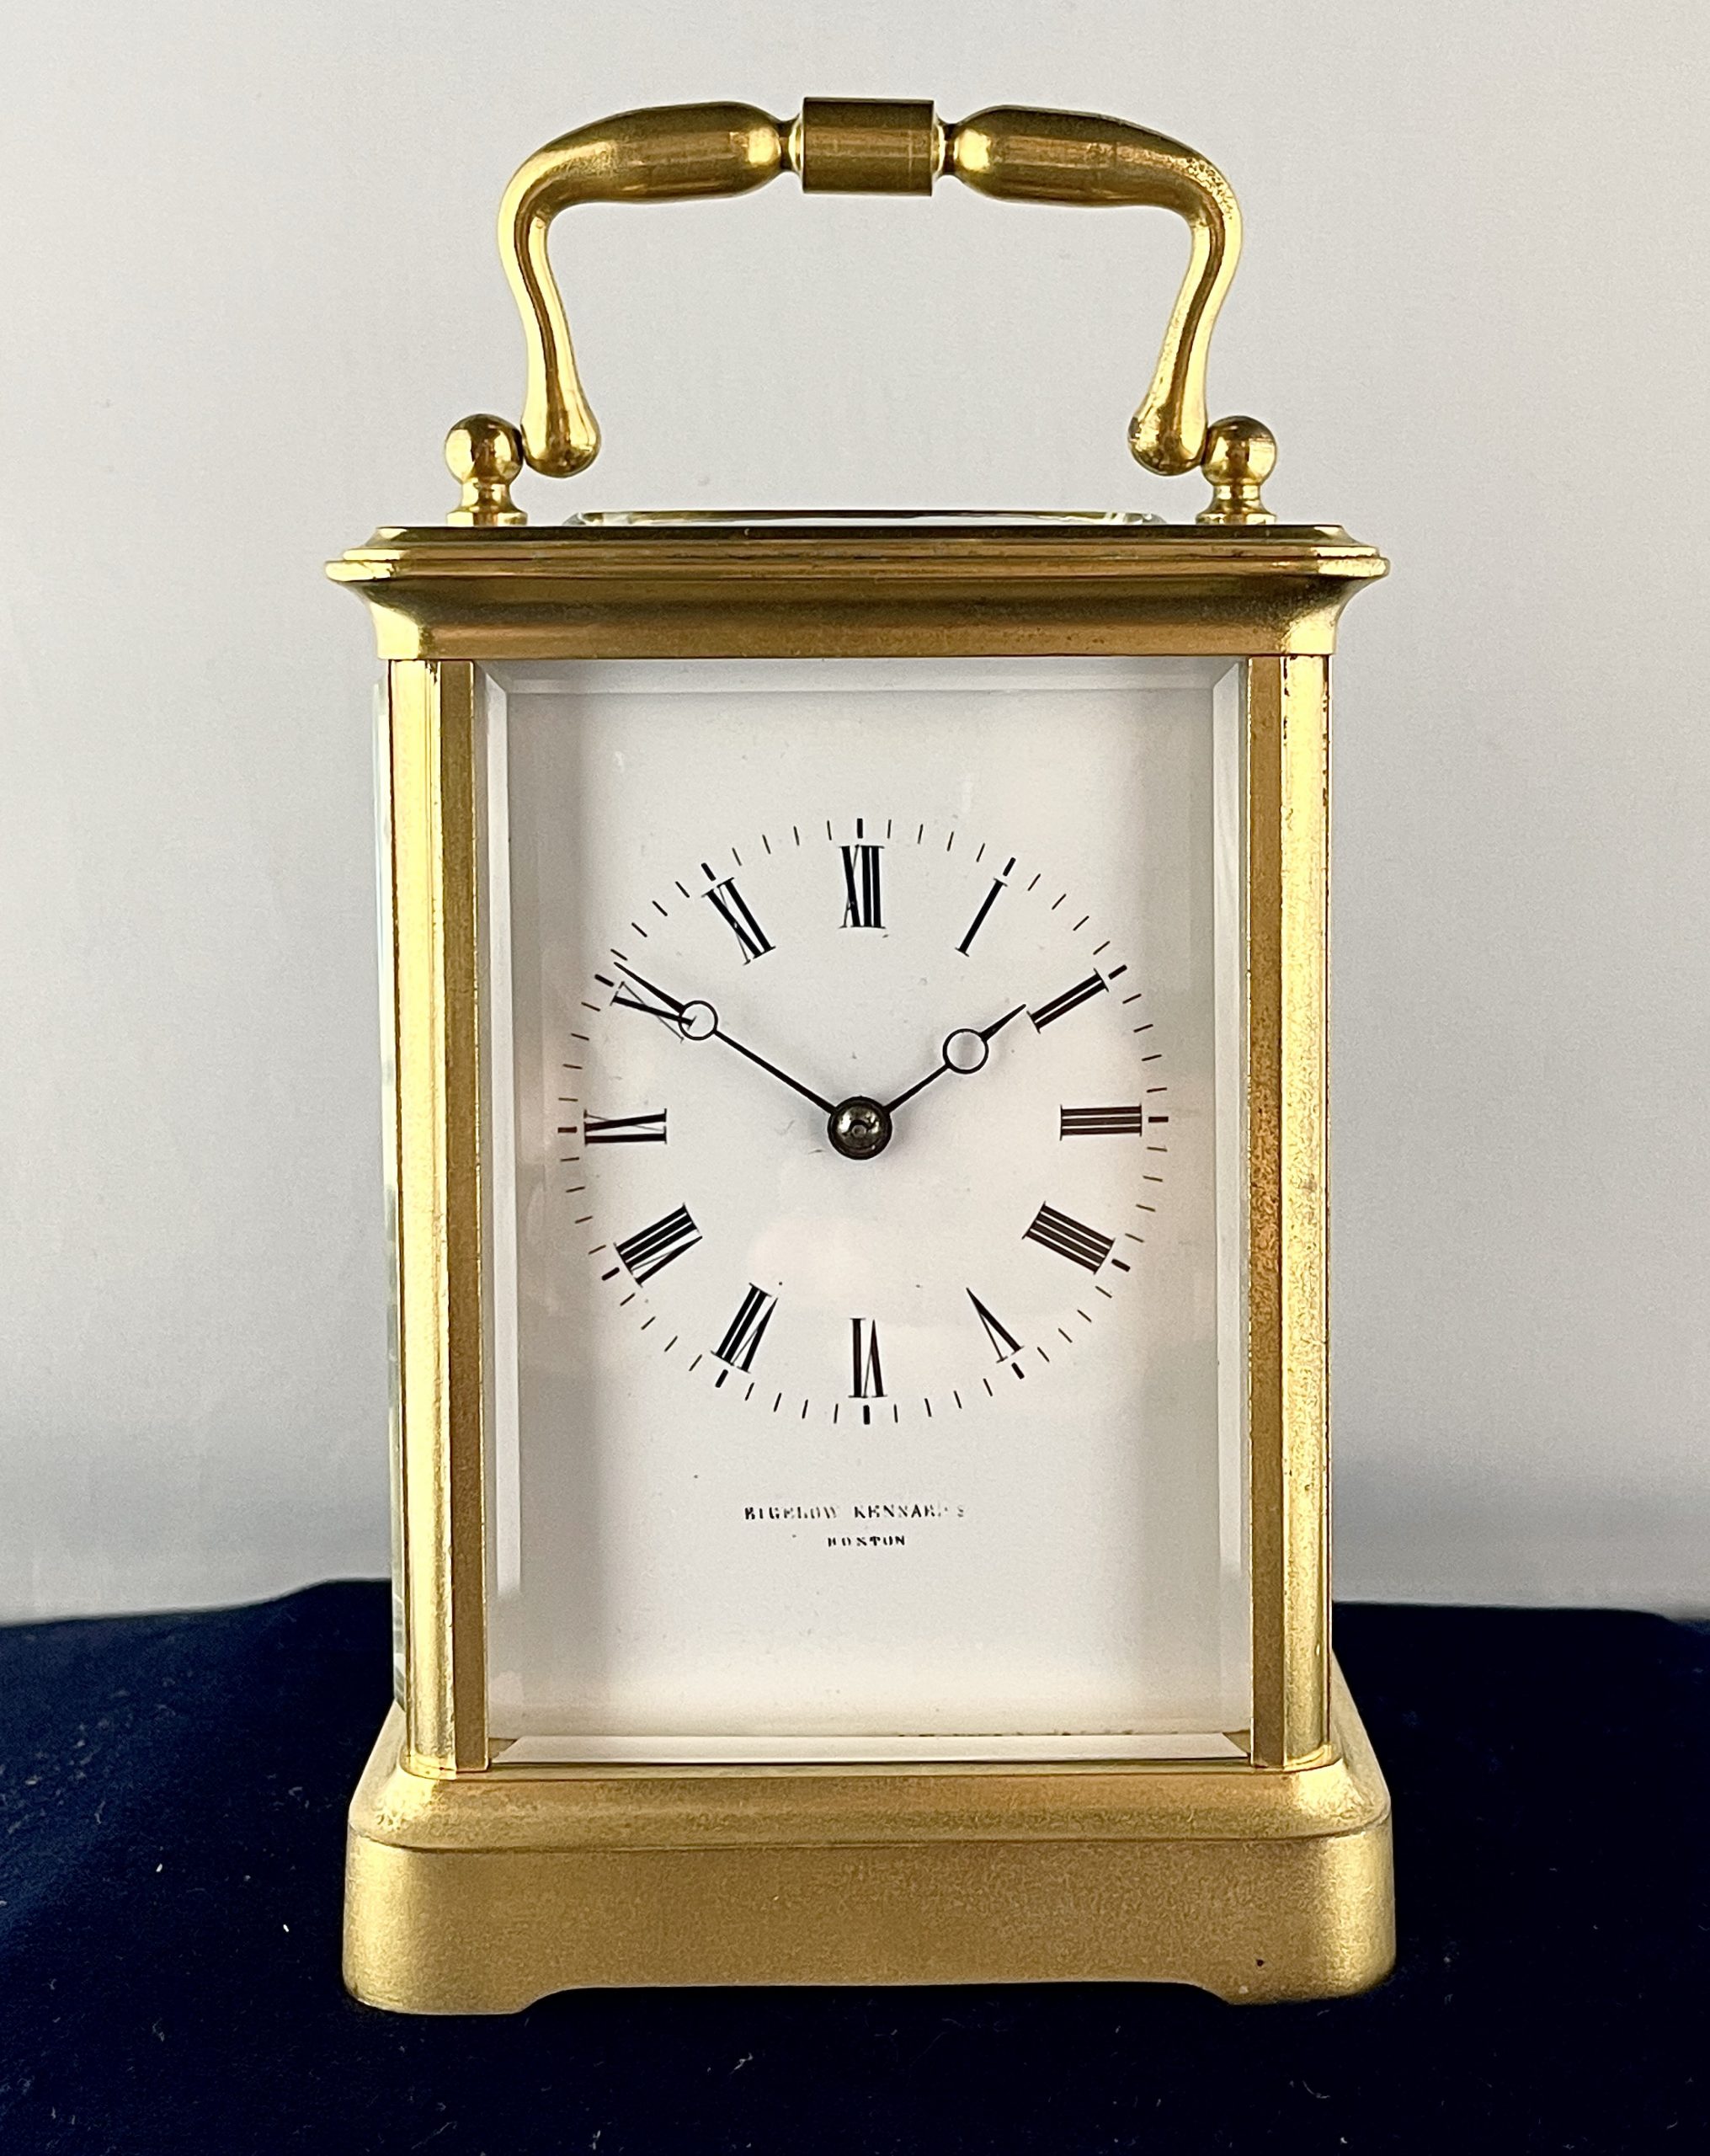 Bigelow Kennard Carriage Clock